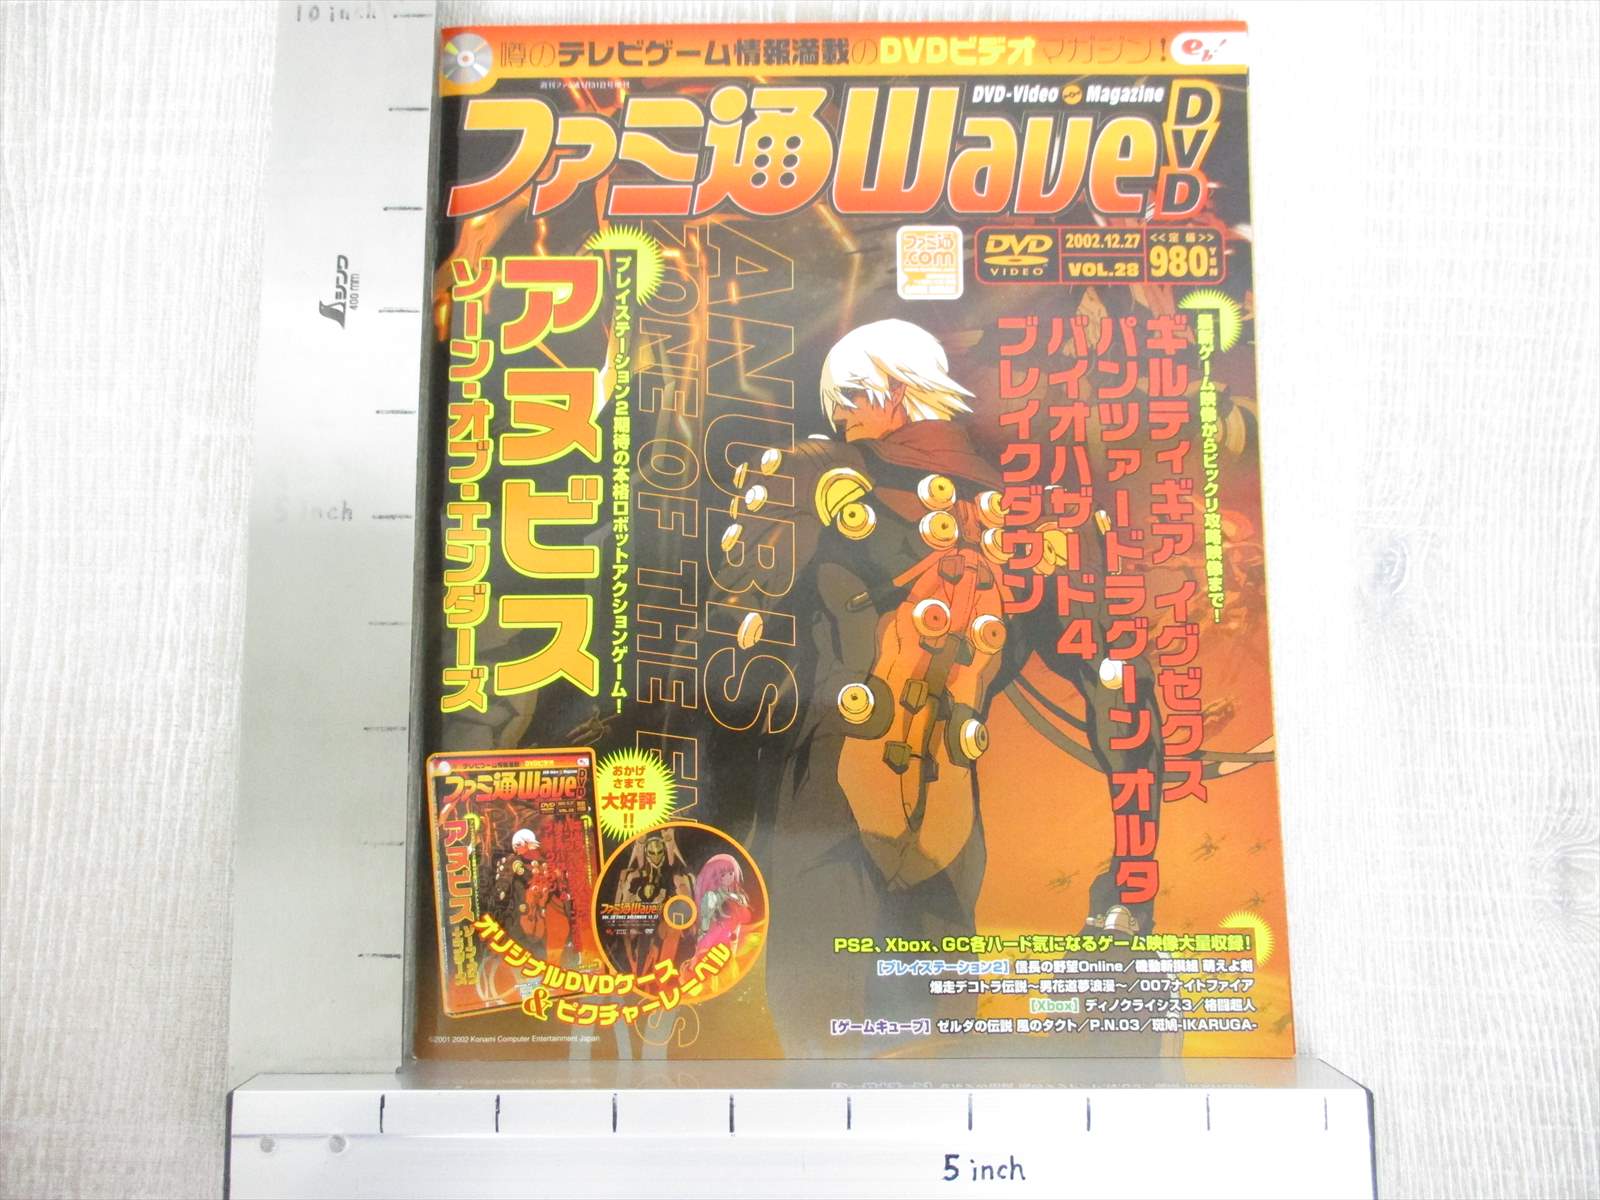 Famitsu Wave Dvd 12 02 W Dvd Game Guide Art Book Anubis Guilty Gear Xx Eb Ebay